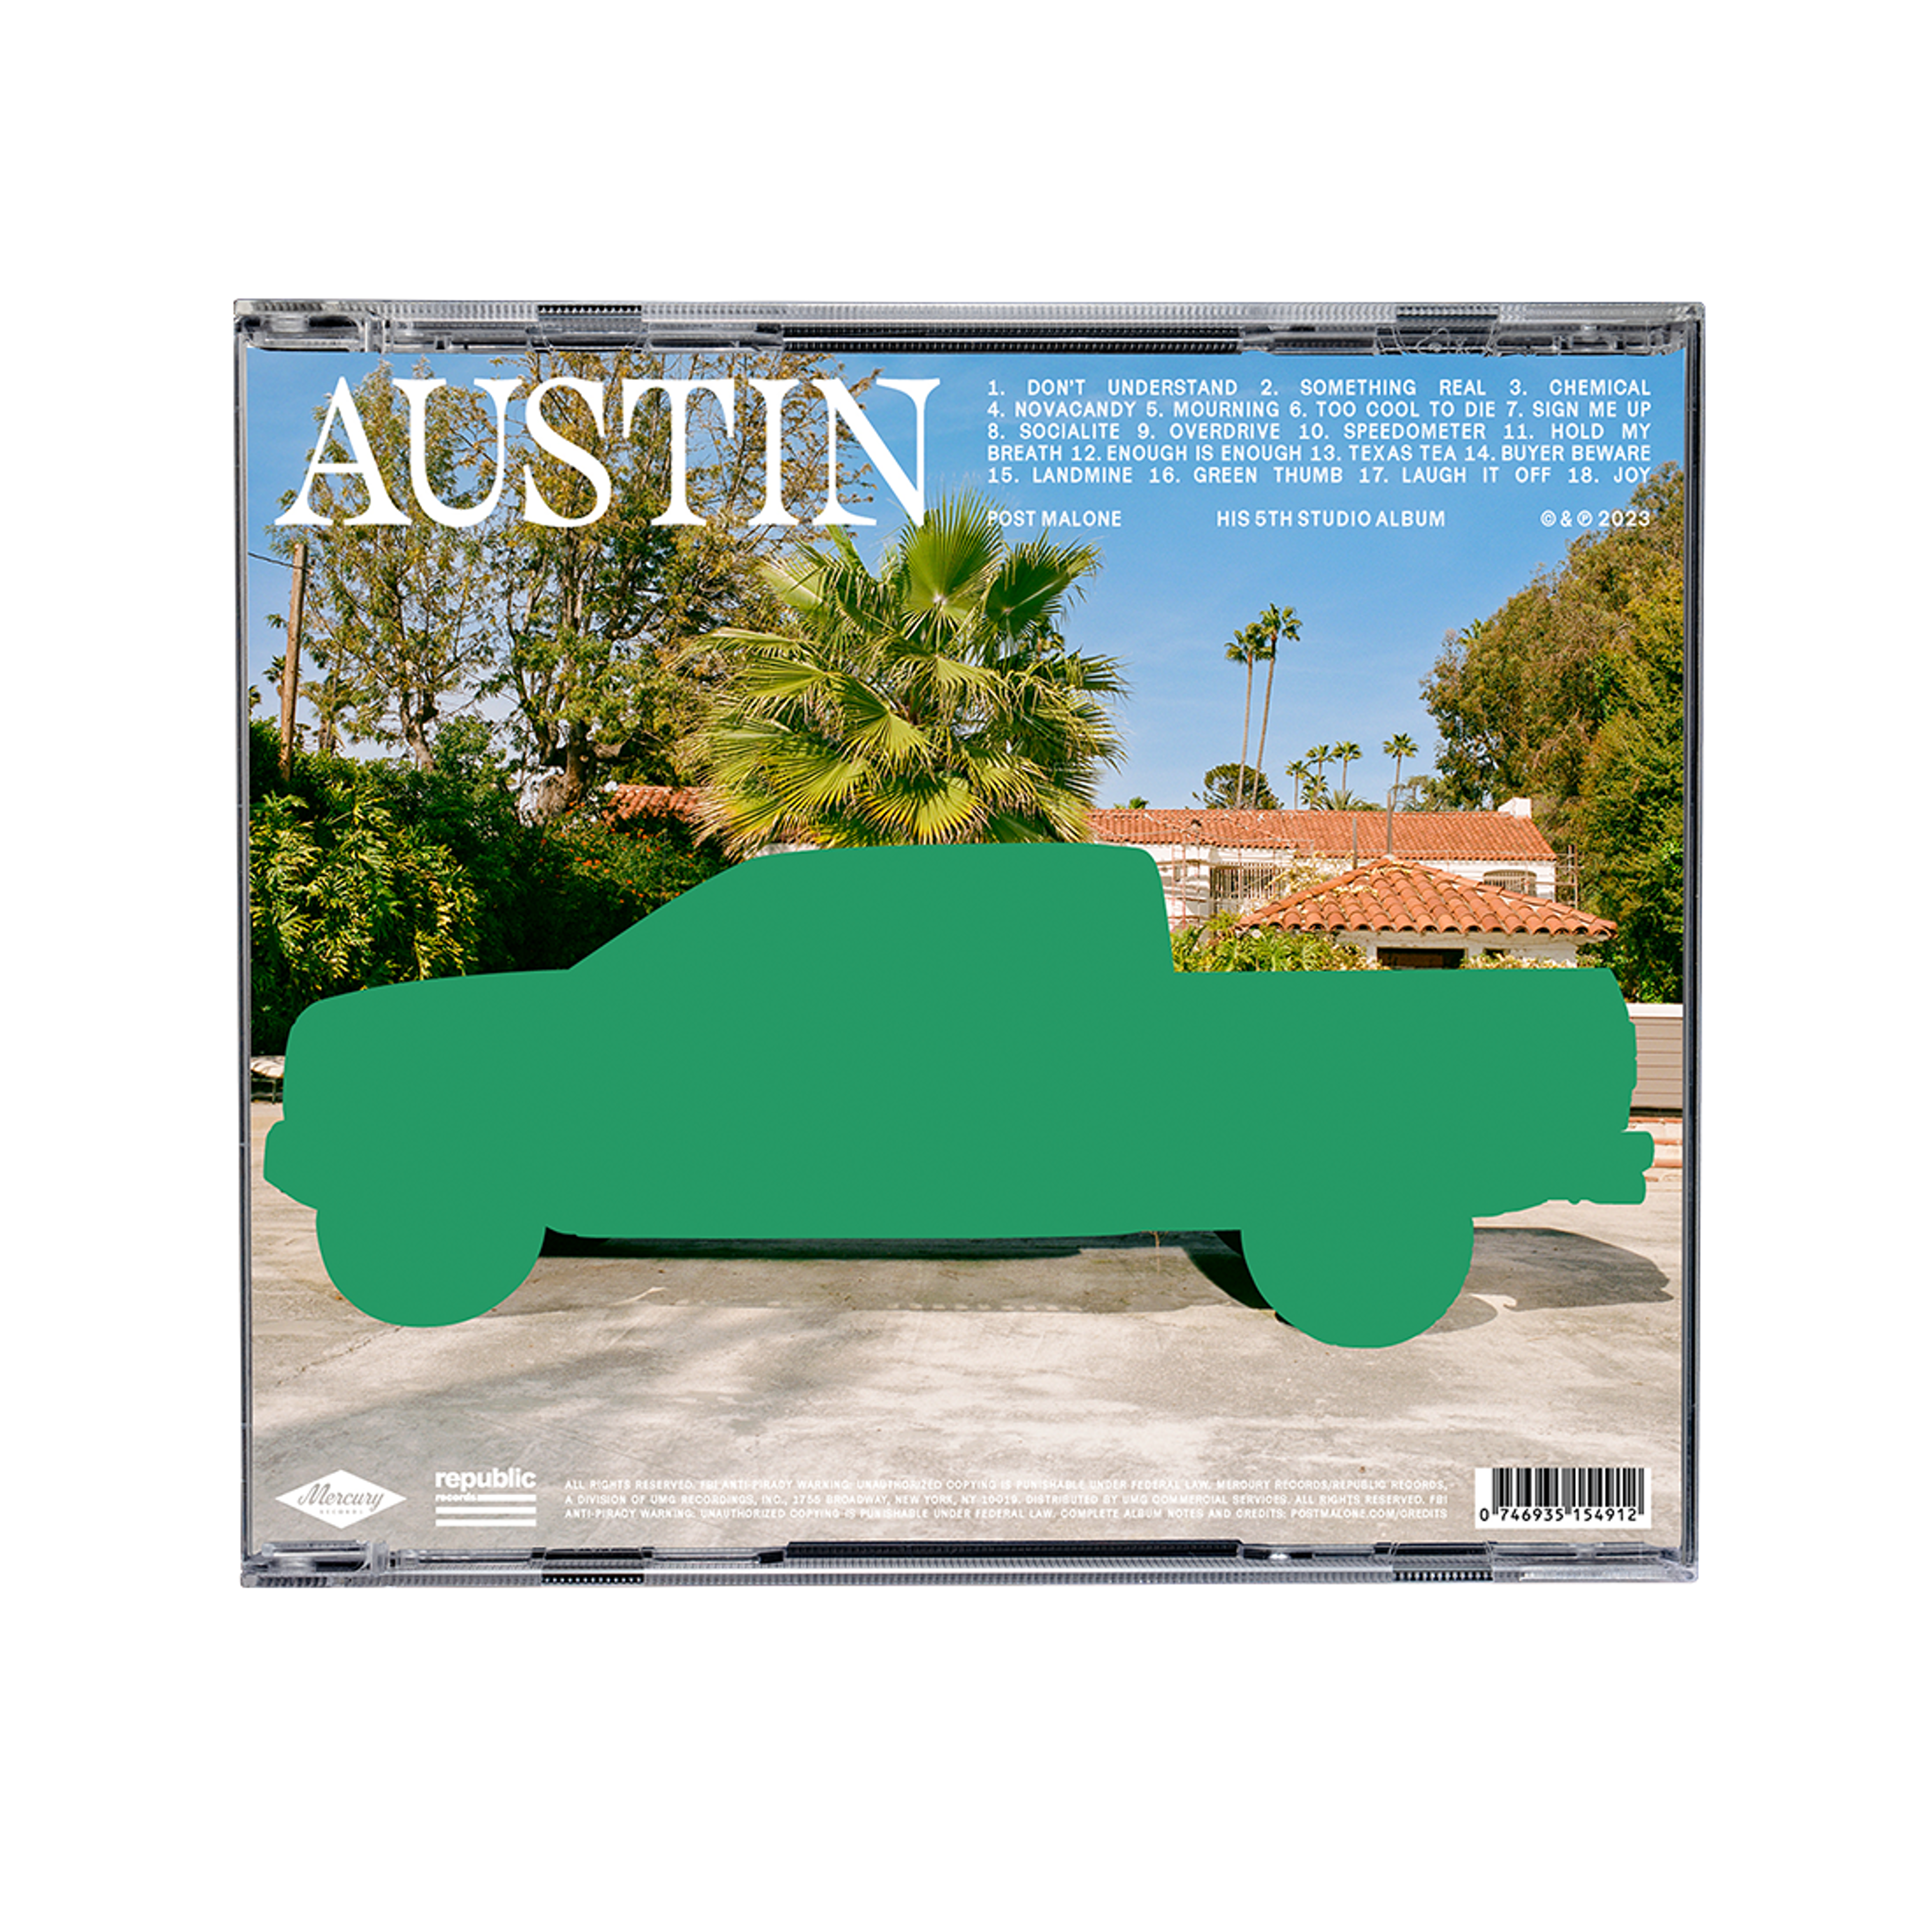 Alternate View 1 of Austin (Alt. Tour Version 2)